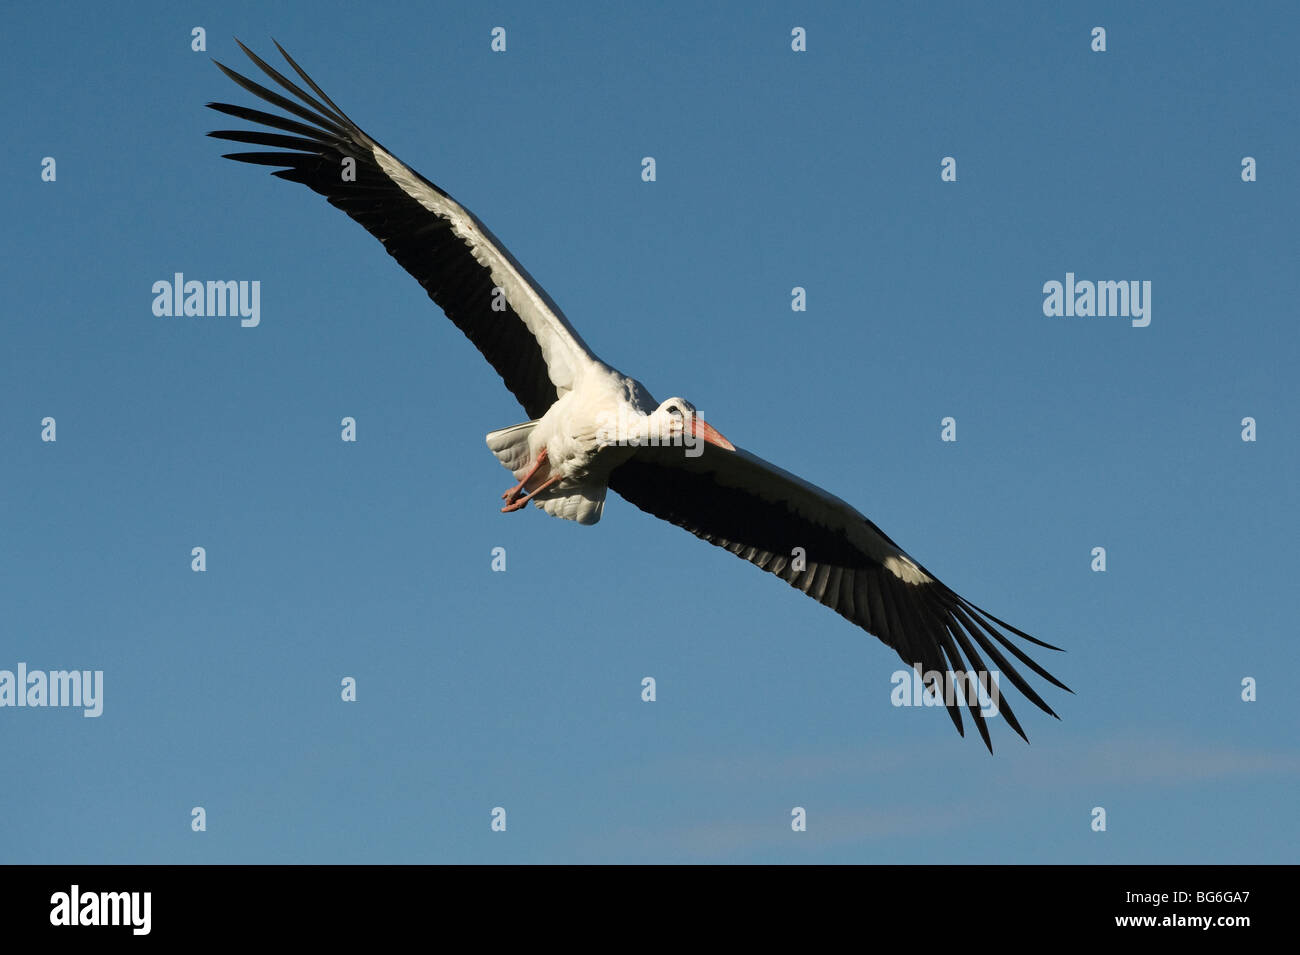 Italy, Piedmont, Racconigi (Cn), a White Stork on the wing Stock Photo